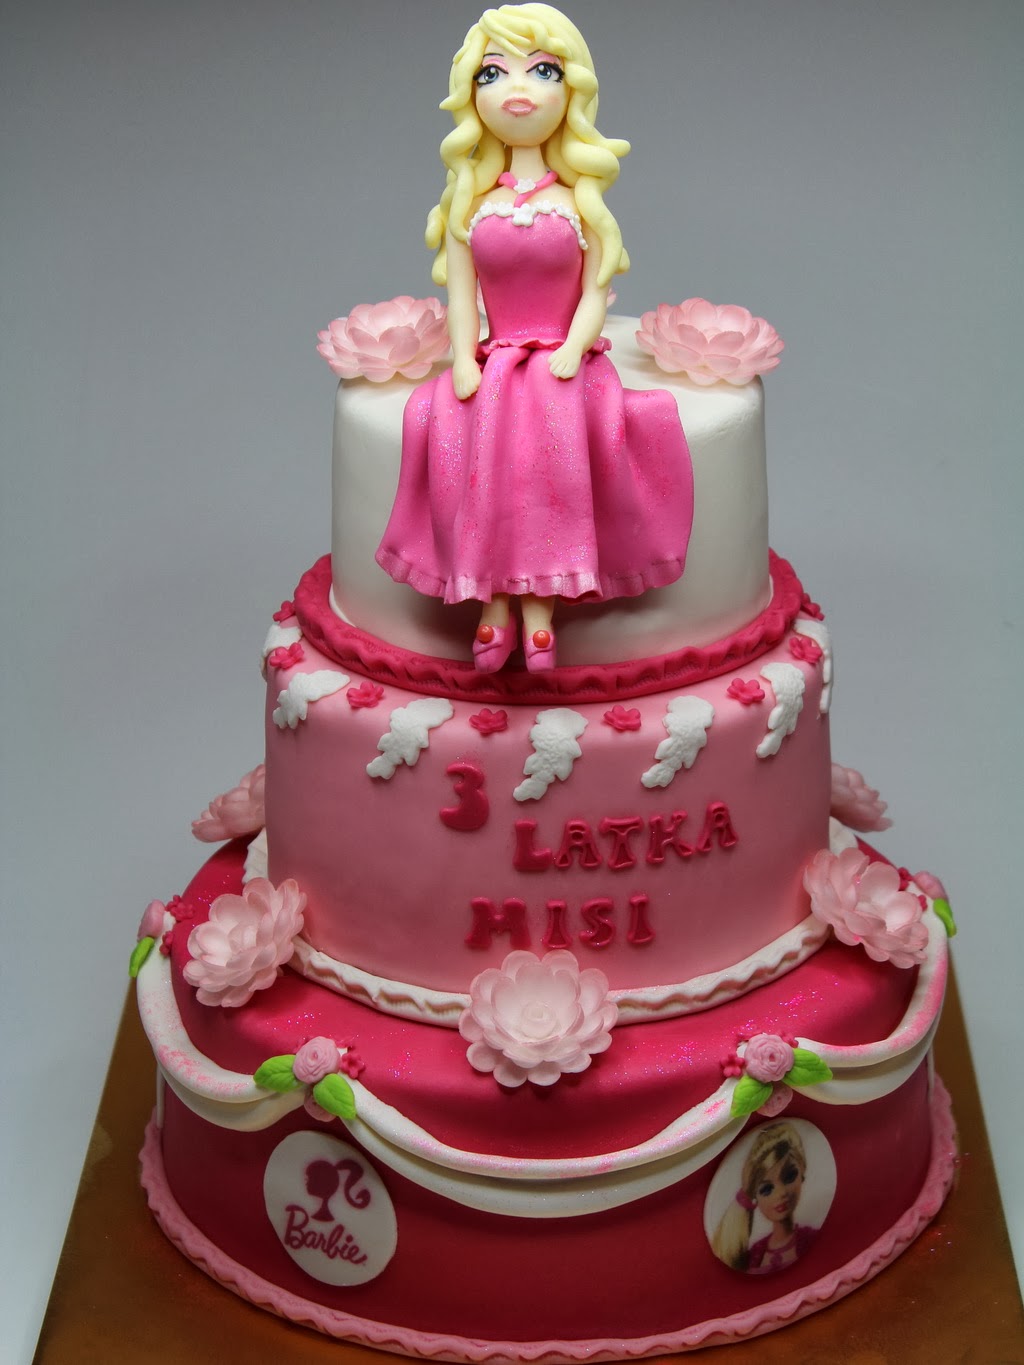 barbie-birthday-cake-london.jpg